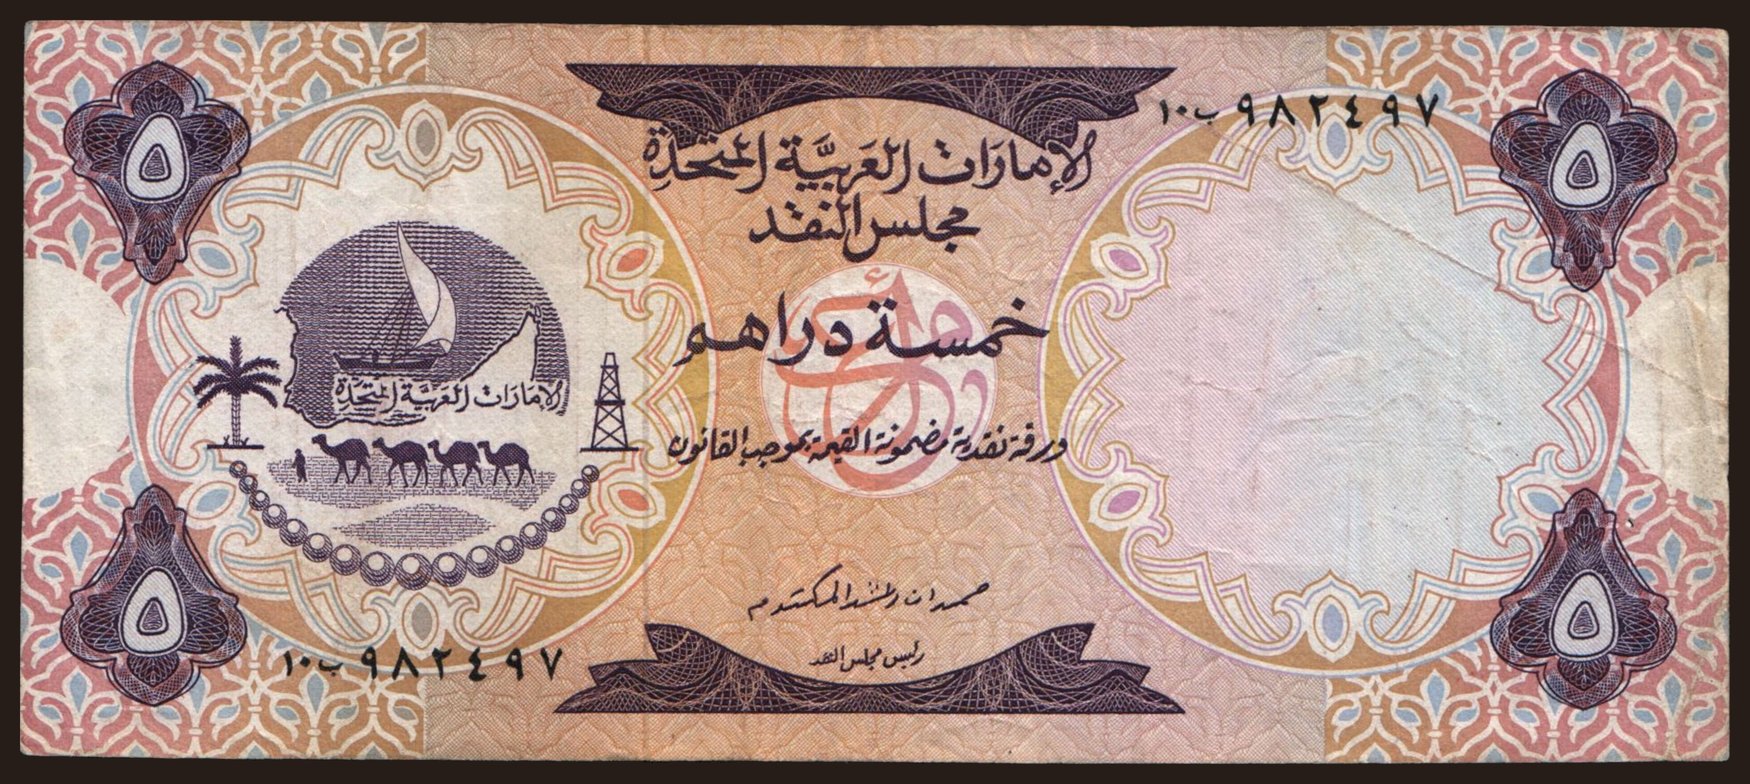 5 dirhams, 1973